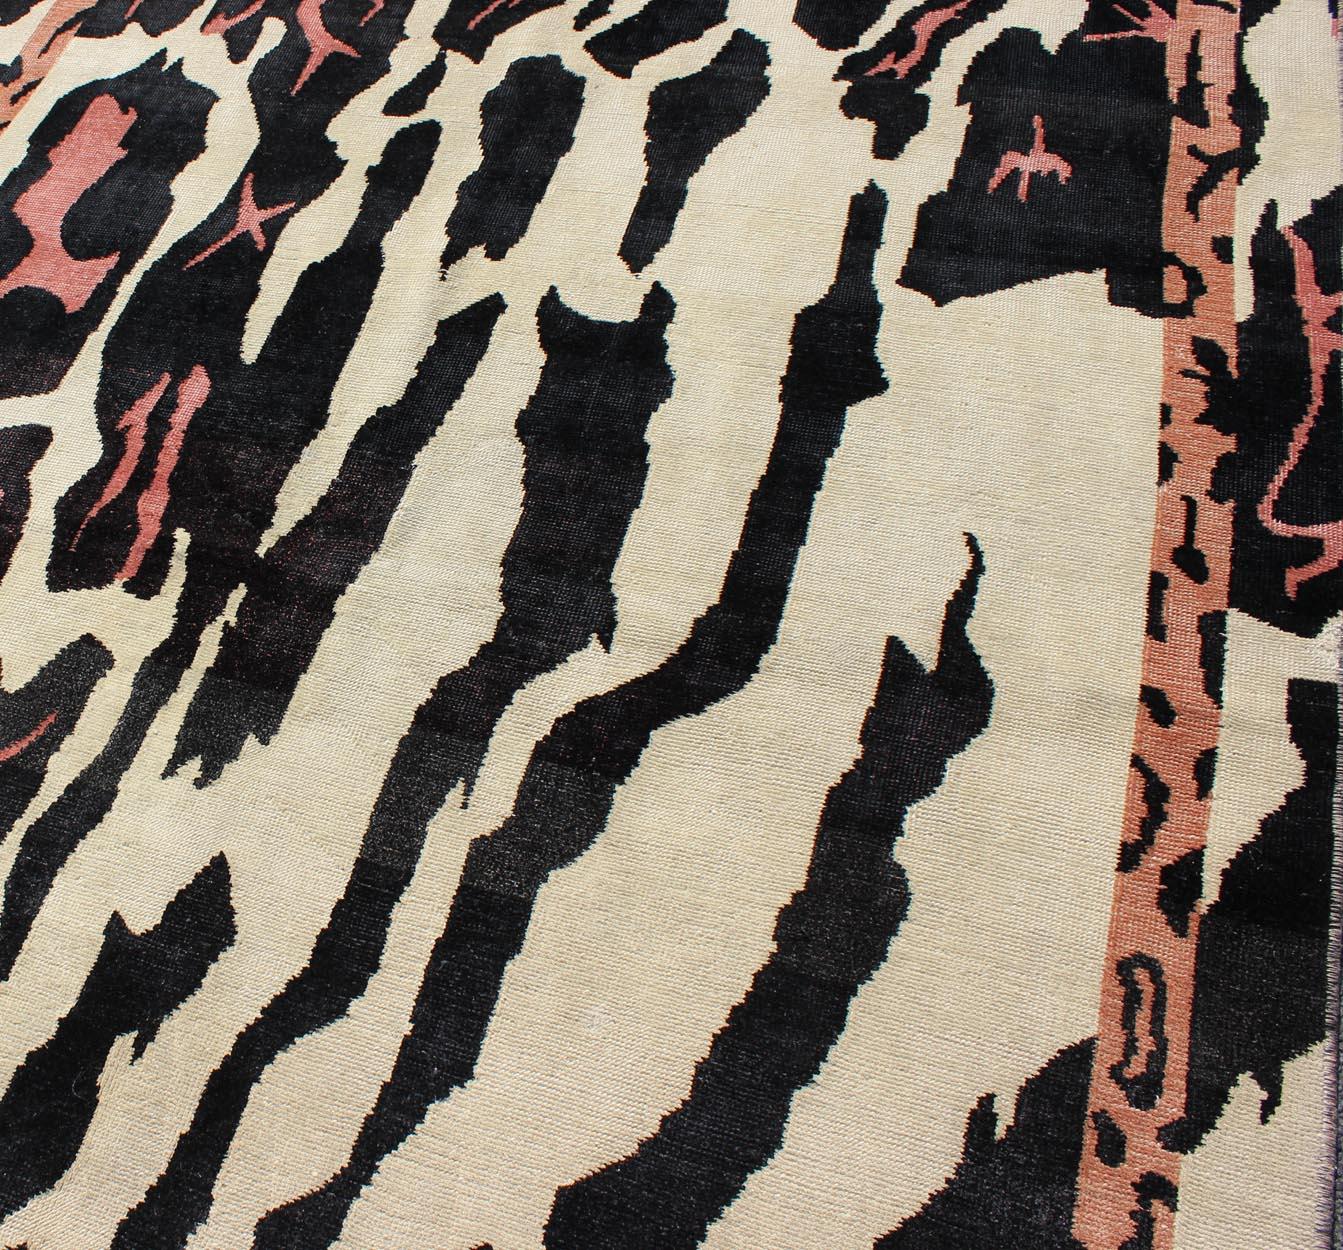 Wool Unique Mid-Century Modern Rug with Zebra Skin Design in Black, Cream & Pink For Sale